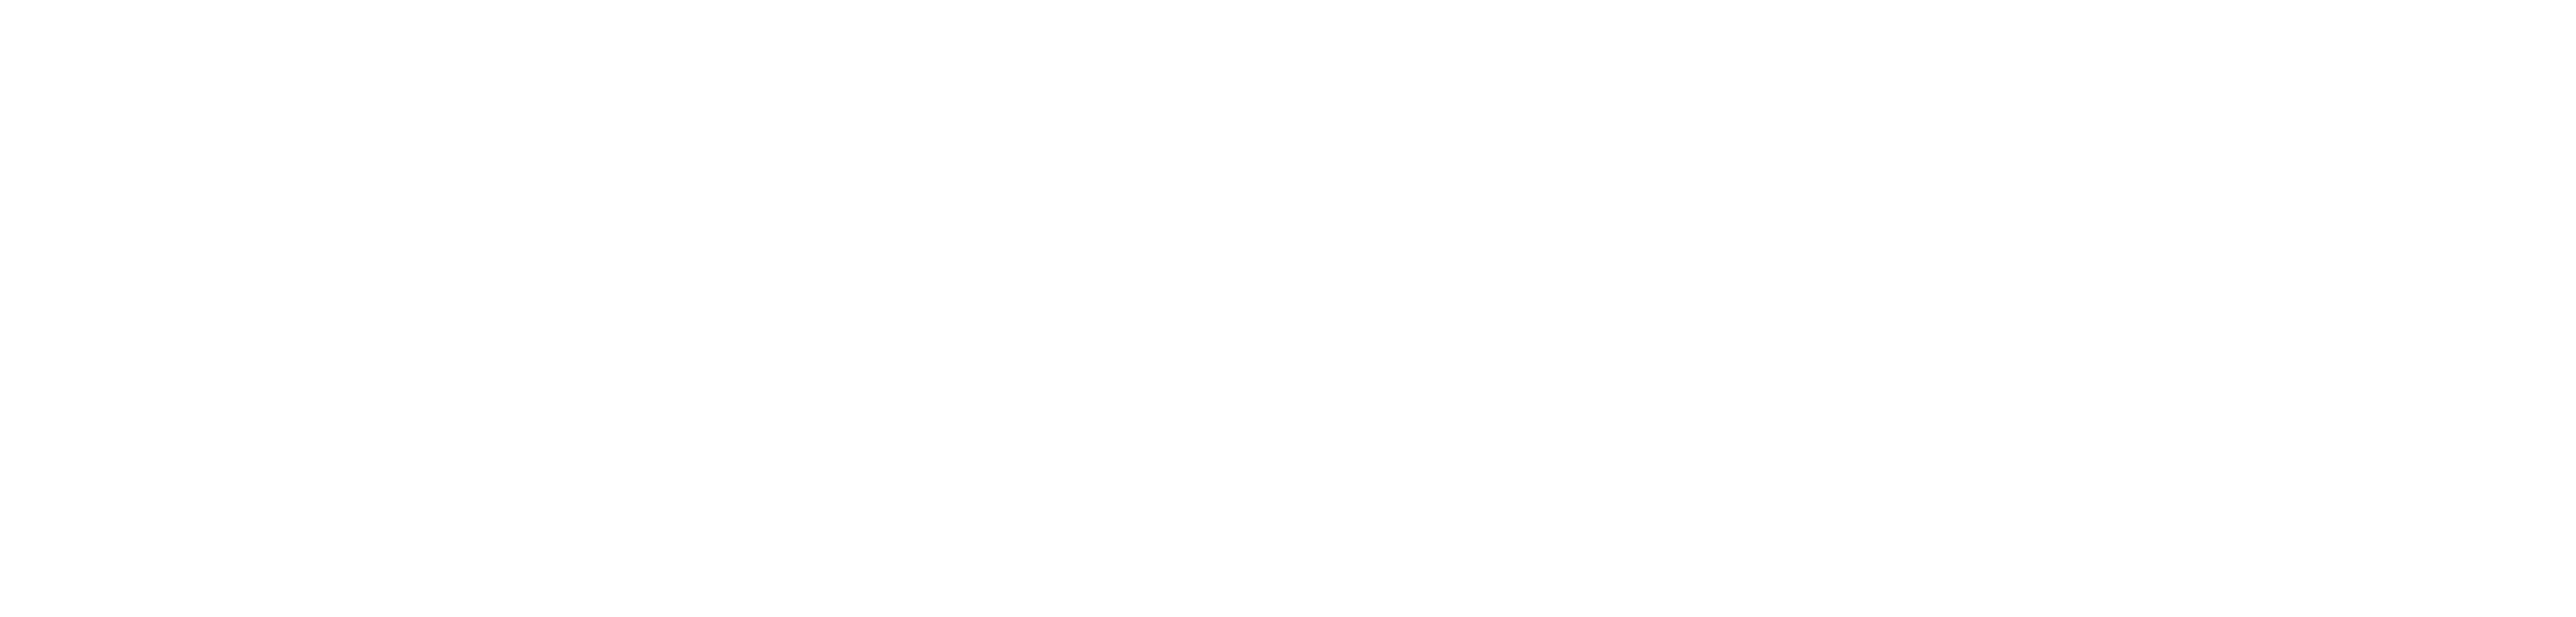 GreenJams logo-white